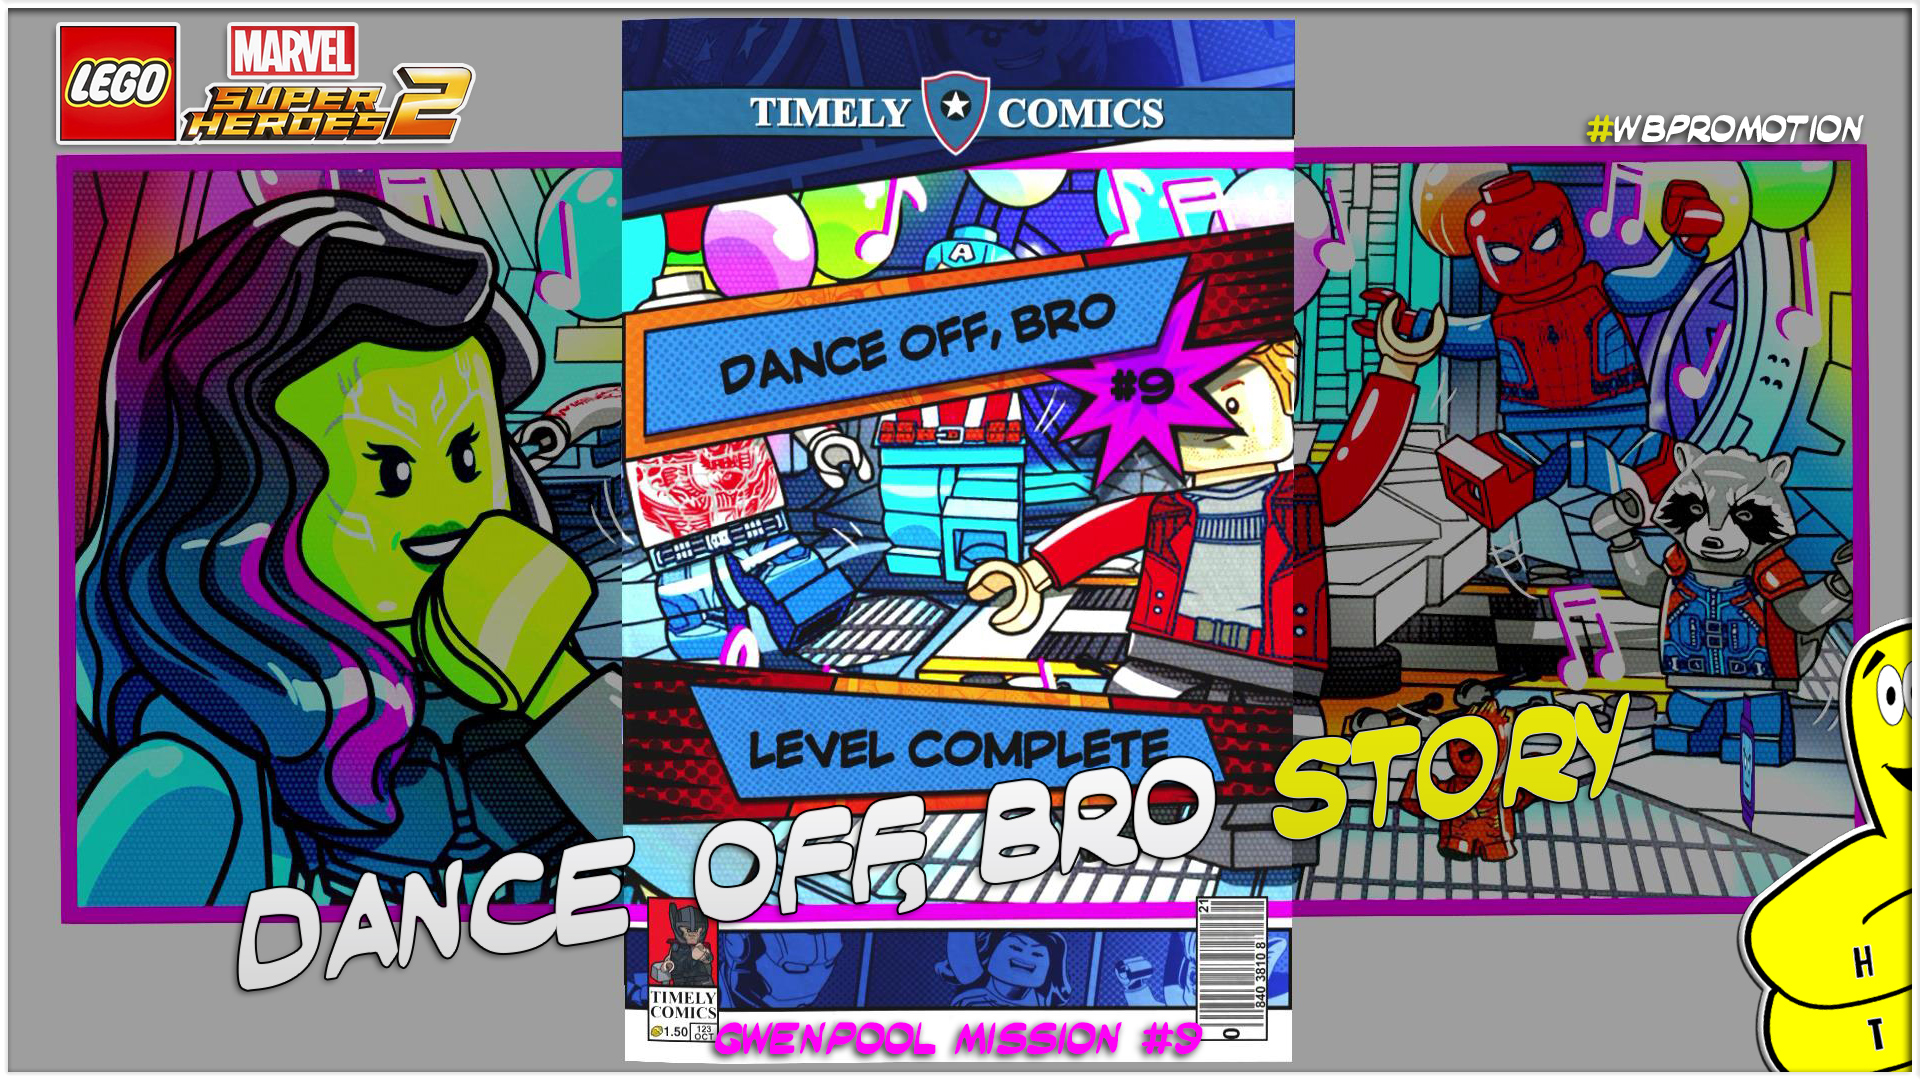 Lego Marvel Superheroes 2: Gwenpool Mission 9 / Dance off, Bro STORY – HTG